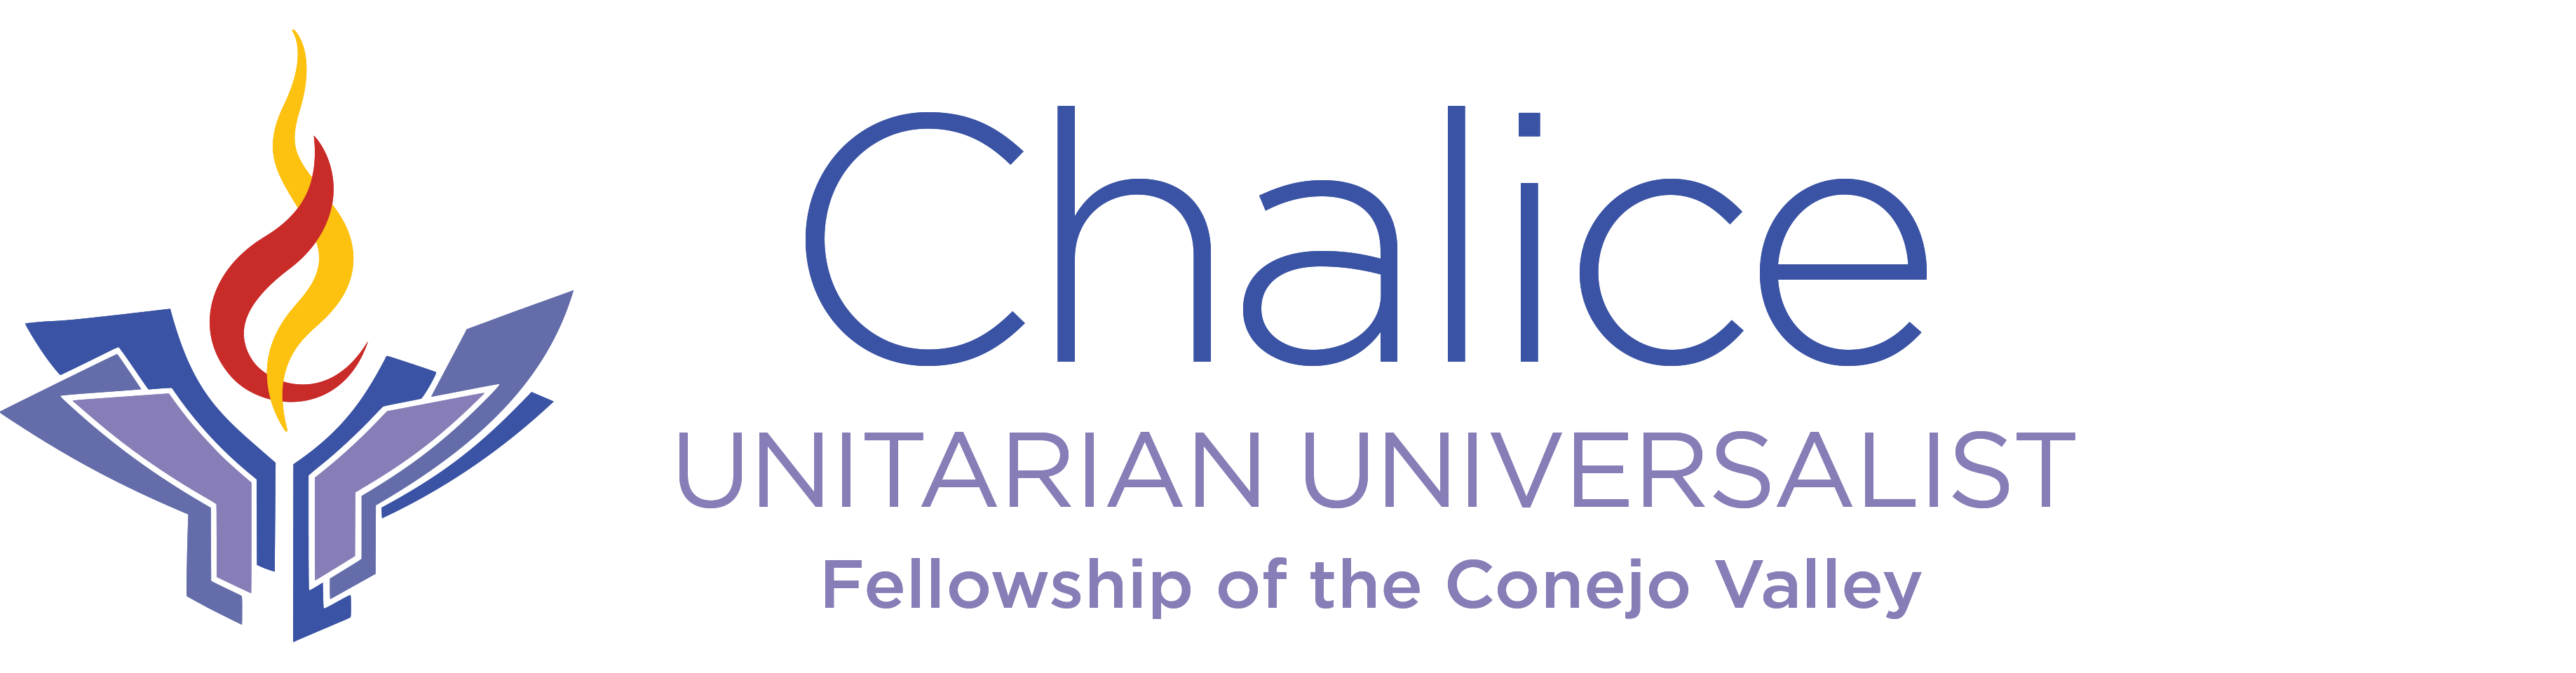 Chalice Unitarian Universalist Church